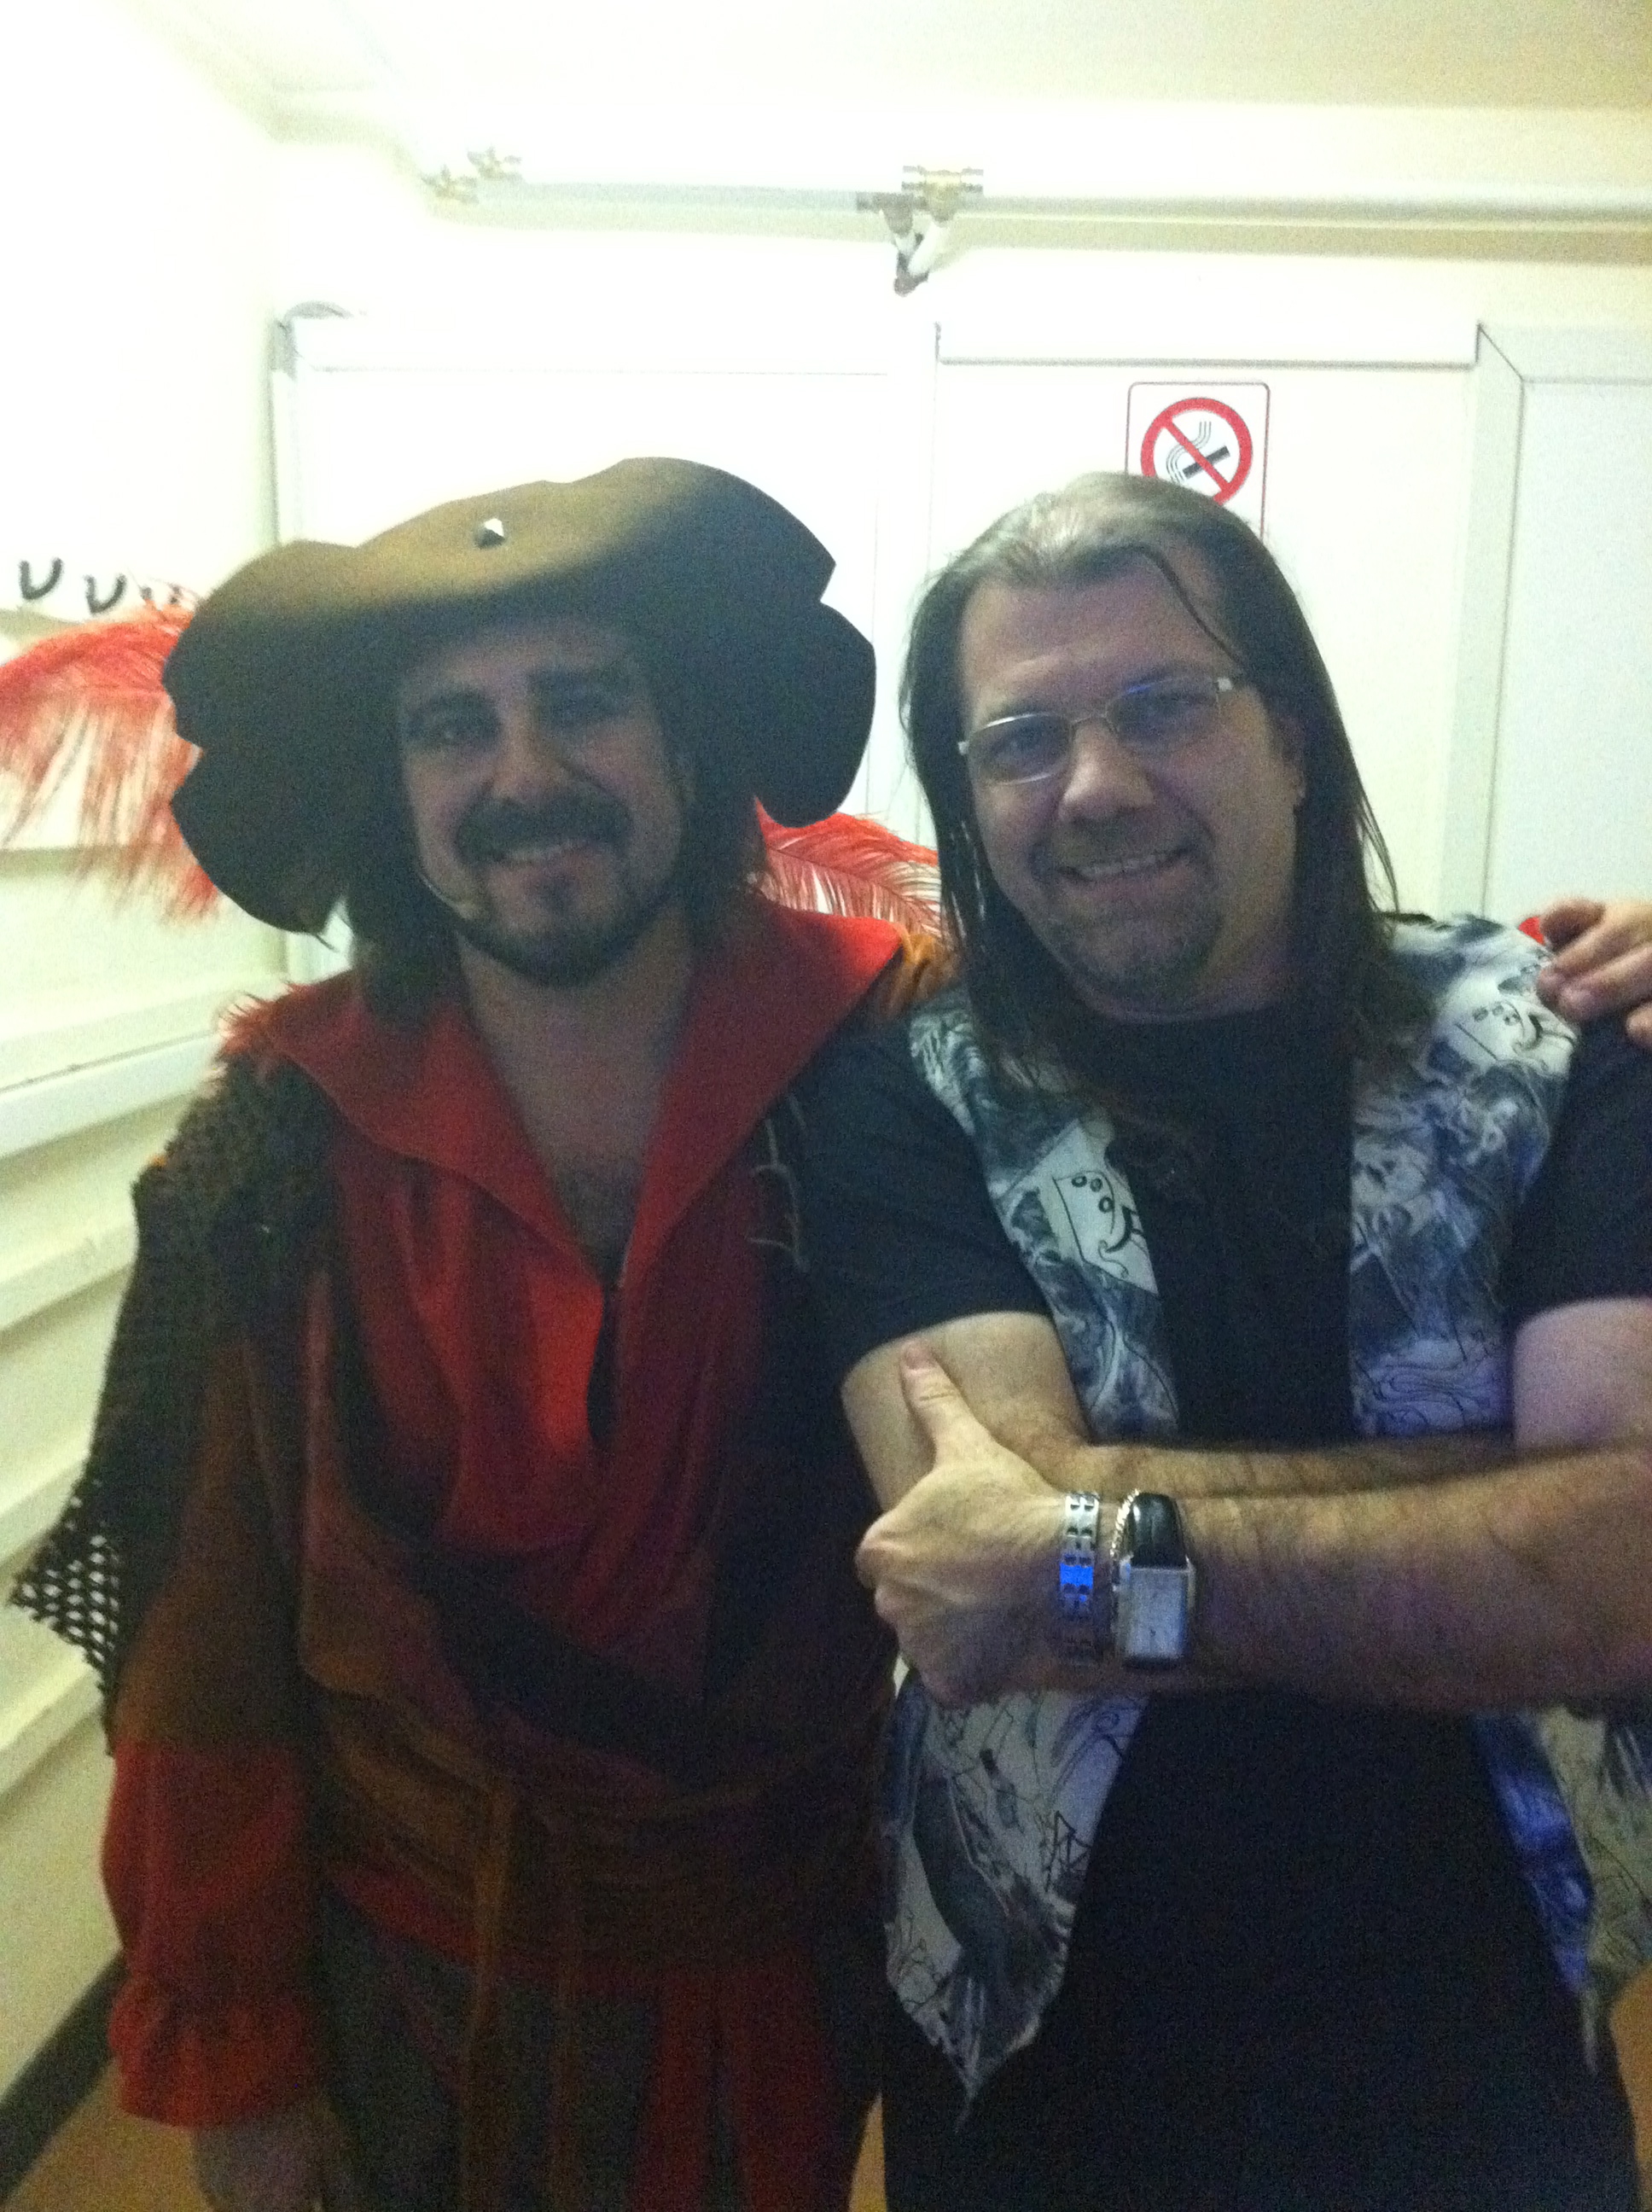 at Teatro Nuovo Milano (MI)
during the Musical "Pirates" 2011